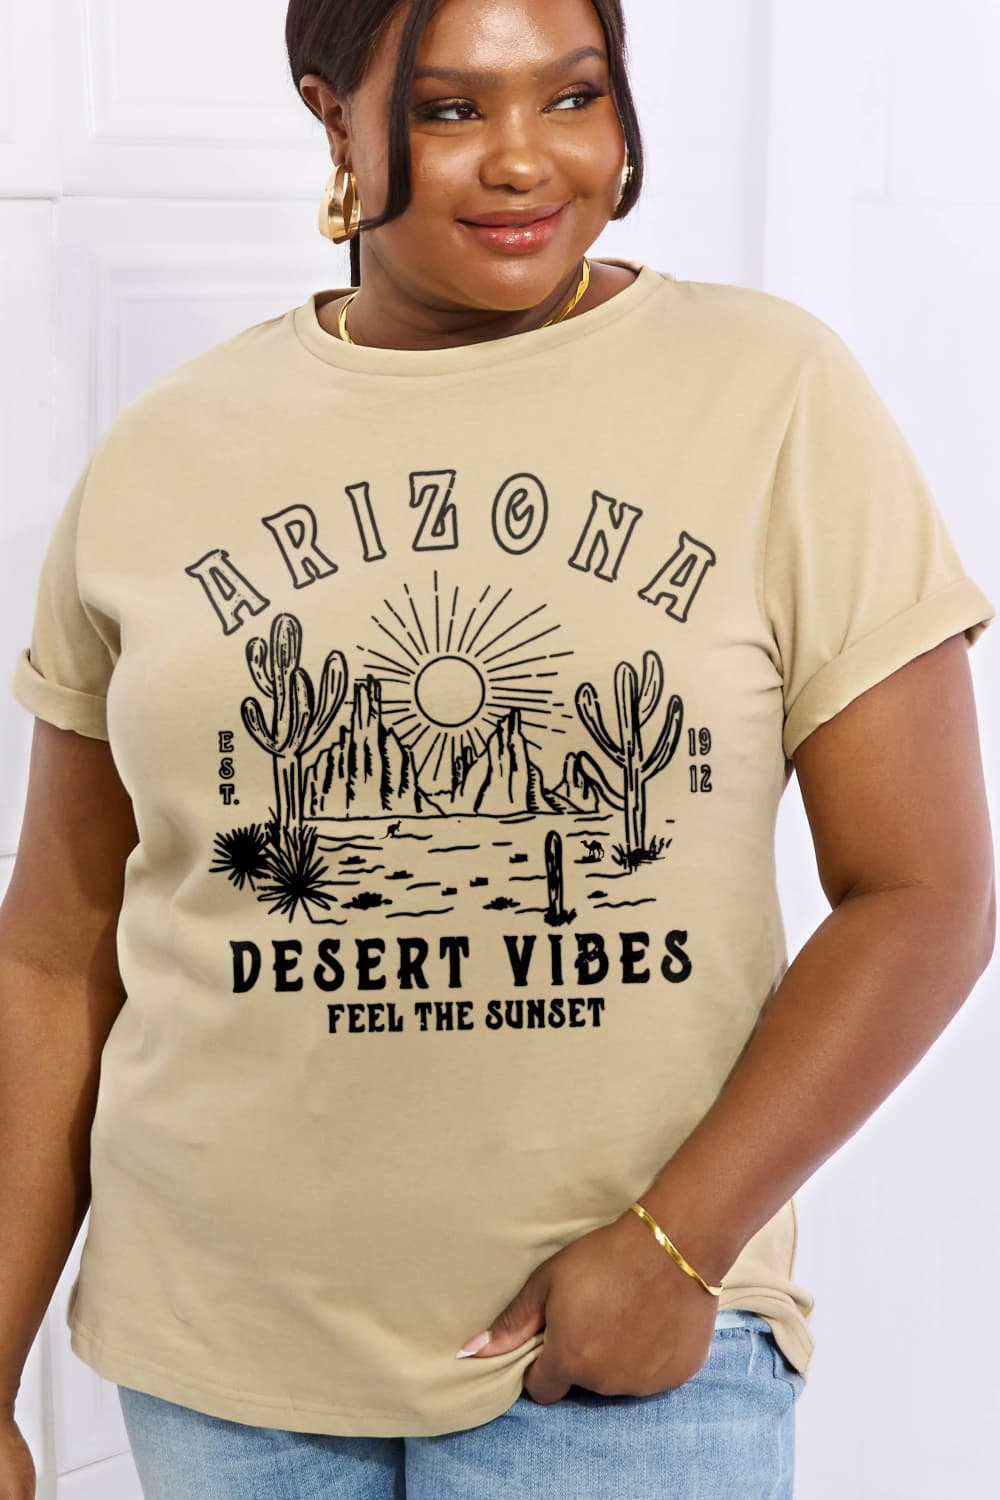 Poshoot  Simply Love Full Size ARIZONA DESERT VIBES FEEL THE SUNSET Graphic Cotton Tee